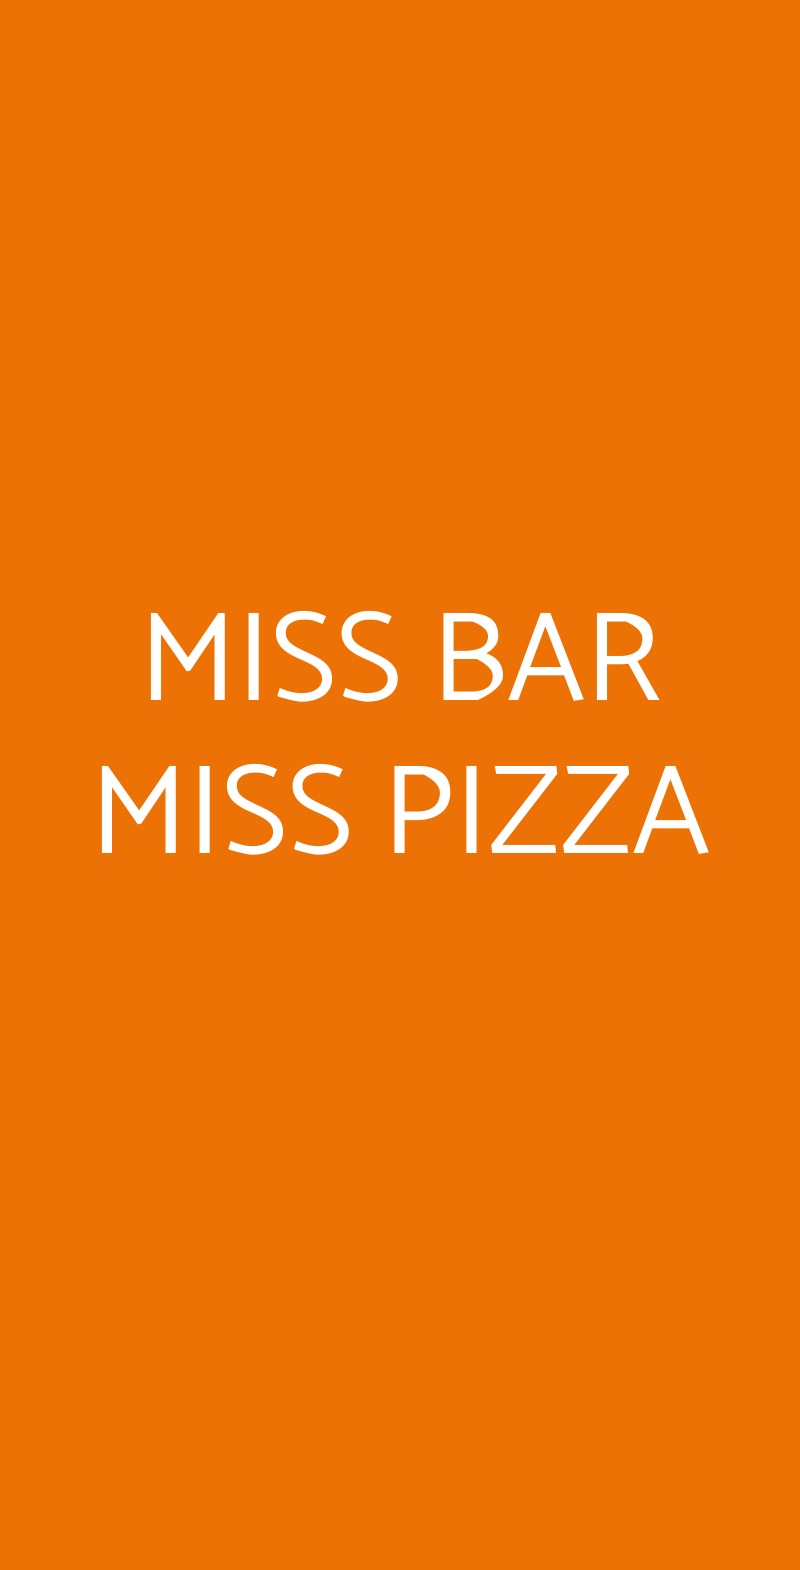 Miss Pizza Kebab Bar Collegno menù 1 pagina